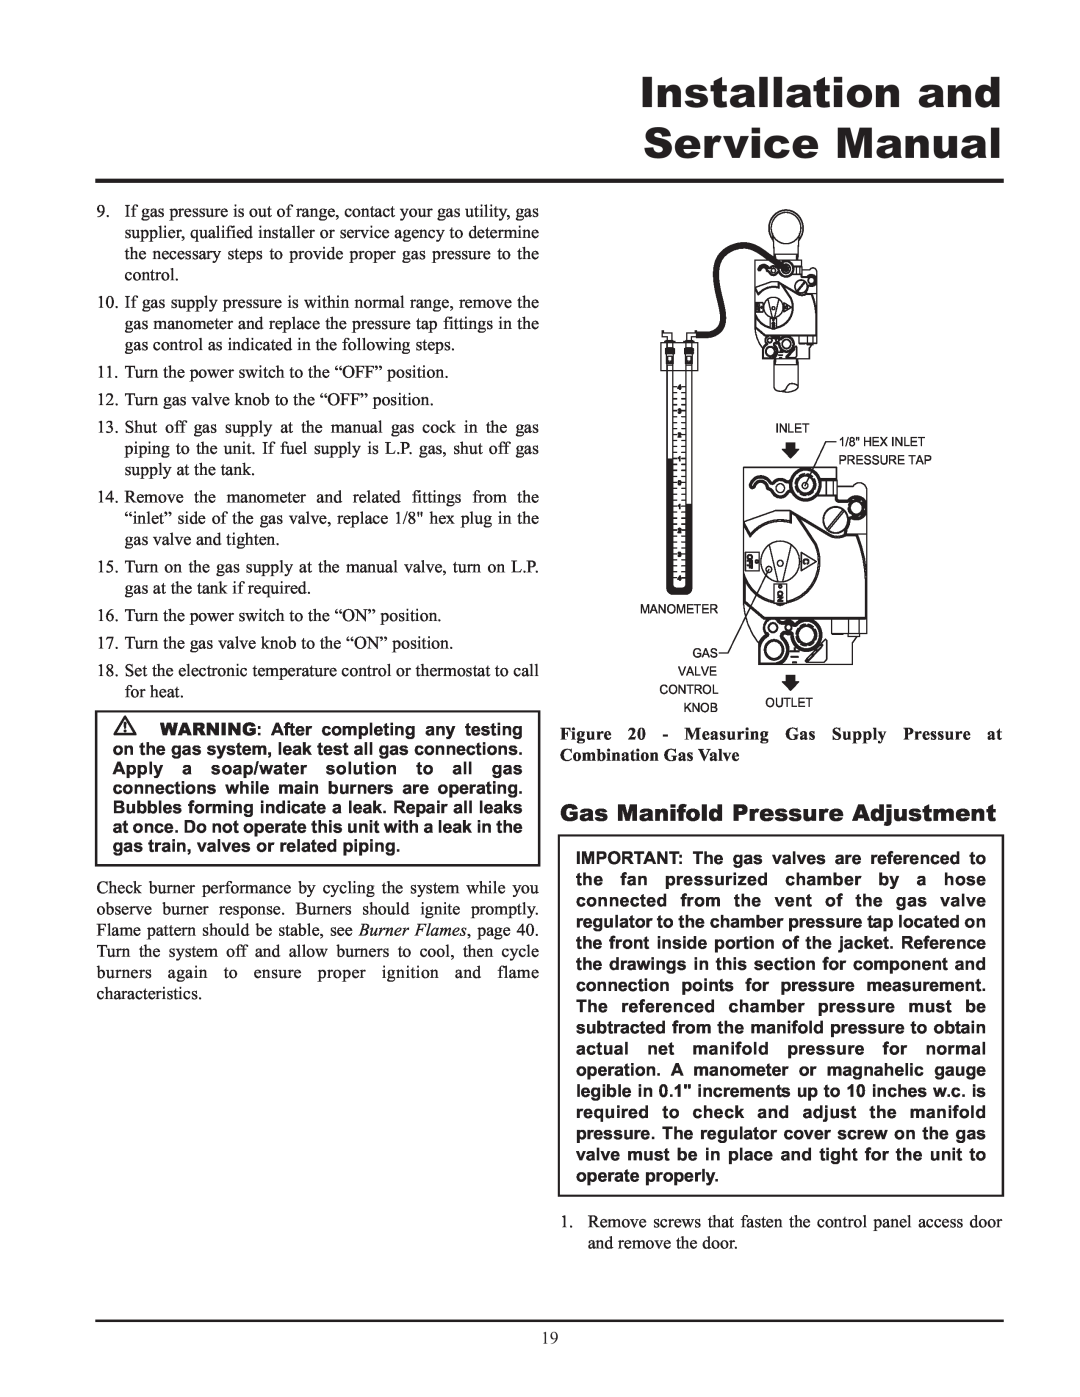 Lochinvar 065, 495, 000 - 2 service manual Gas Manifold Pressure Adjustment 